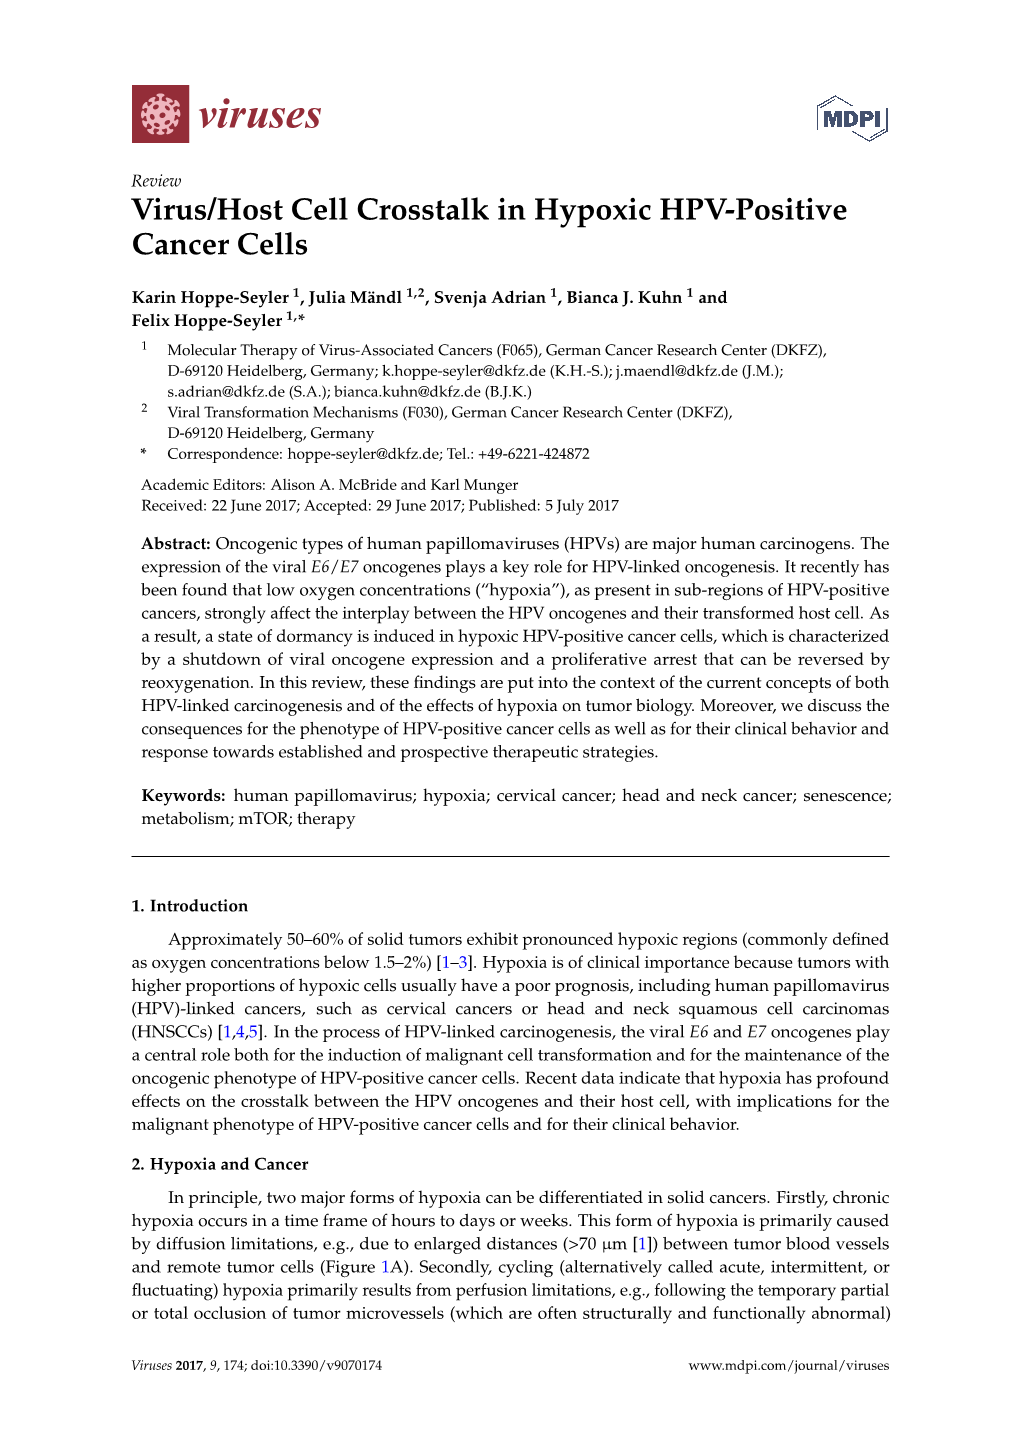 Virus/Host Cell Crosstalk in Hypoxic HPV-Positive Cancer Cells